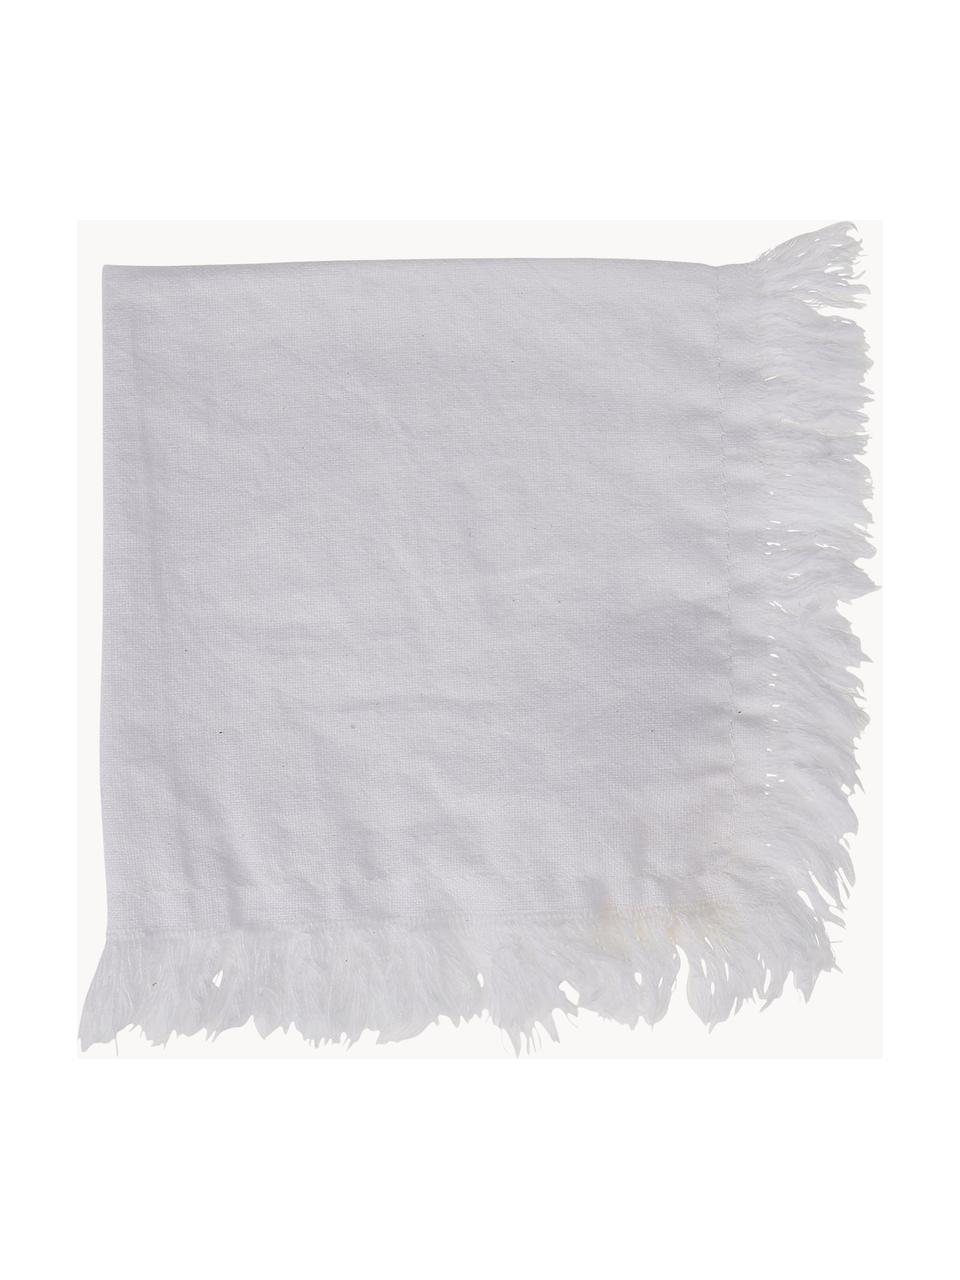 Stoffen servetten Nalia met franjes, 2 stuks, 100% katoen, Wit, B 35 x L 35 cm